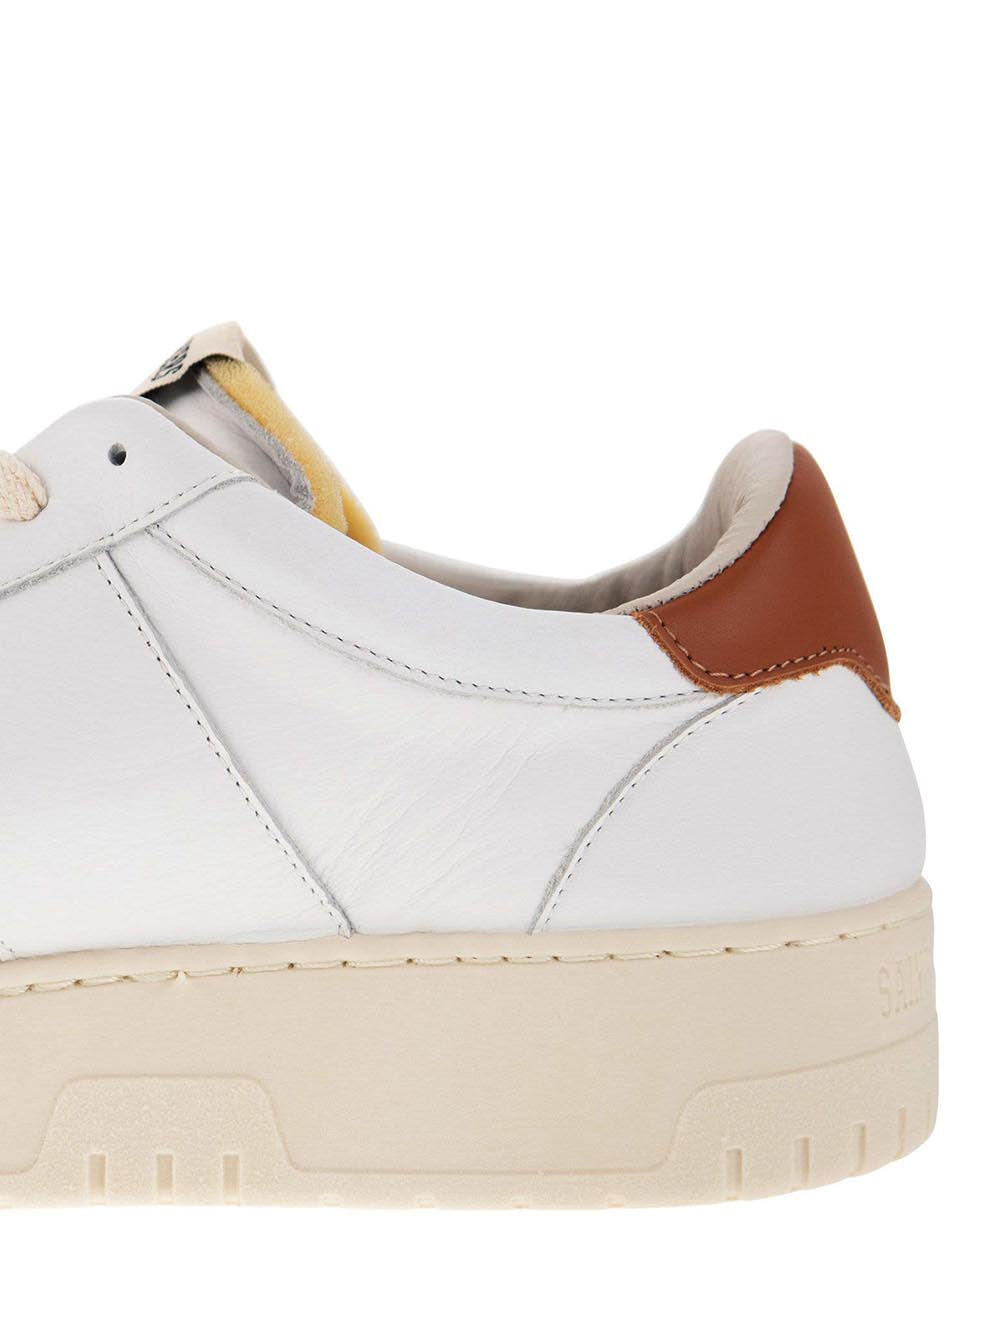 Saint Sneakers Sneakers Uomo Golf Bianco/Cuoio